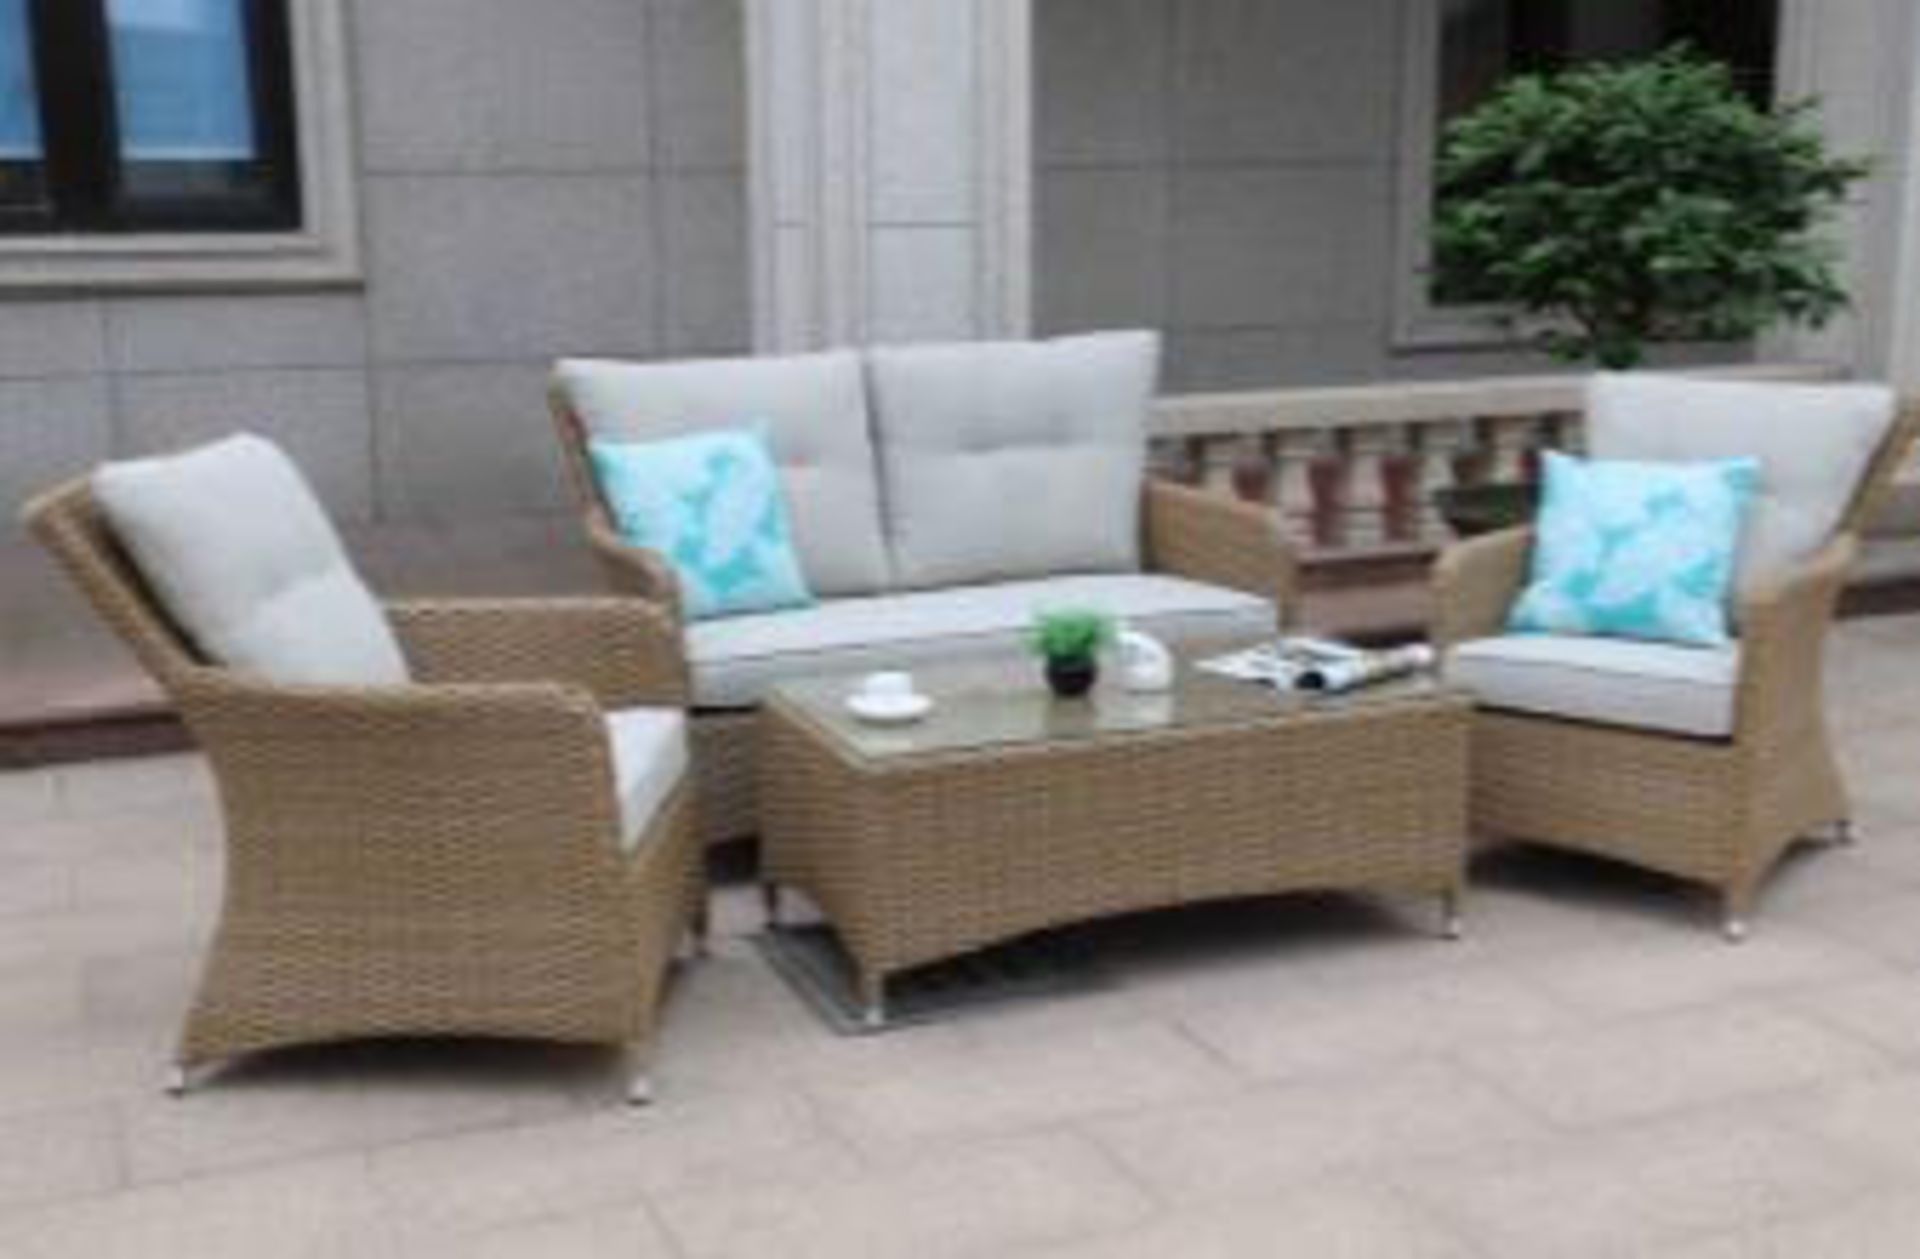 + VAT Brand New Chelsea Garden Company Beige Double Sofa + 2 Armchair Set - Item Is Available